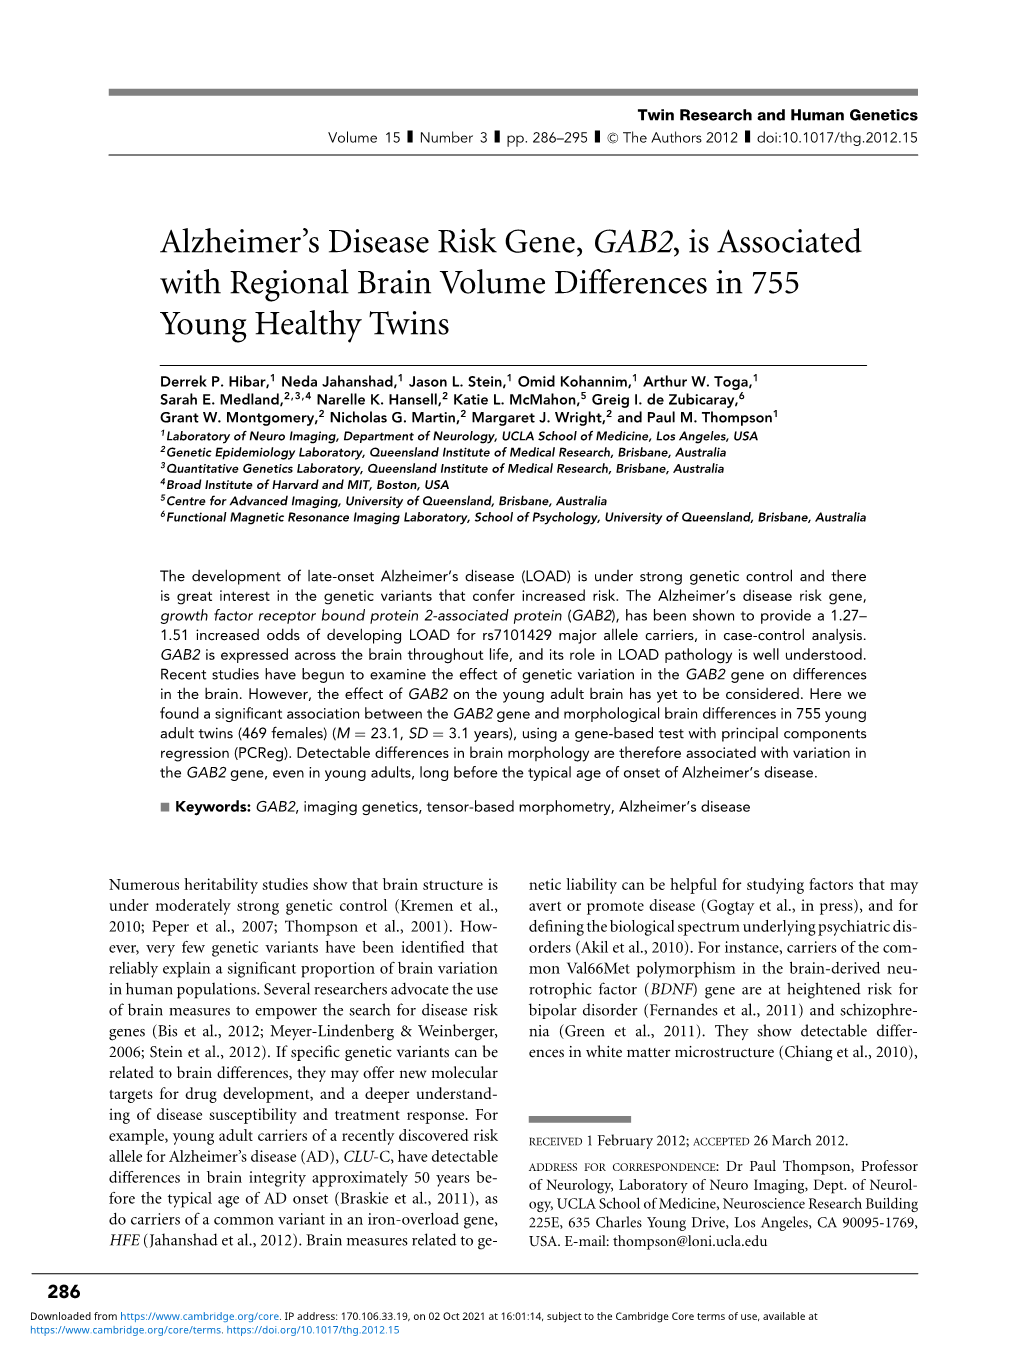 Alzheimer's Disease Risk Gene, GAB2, Is Associated with Regional Brain